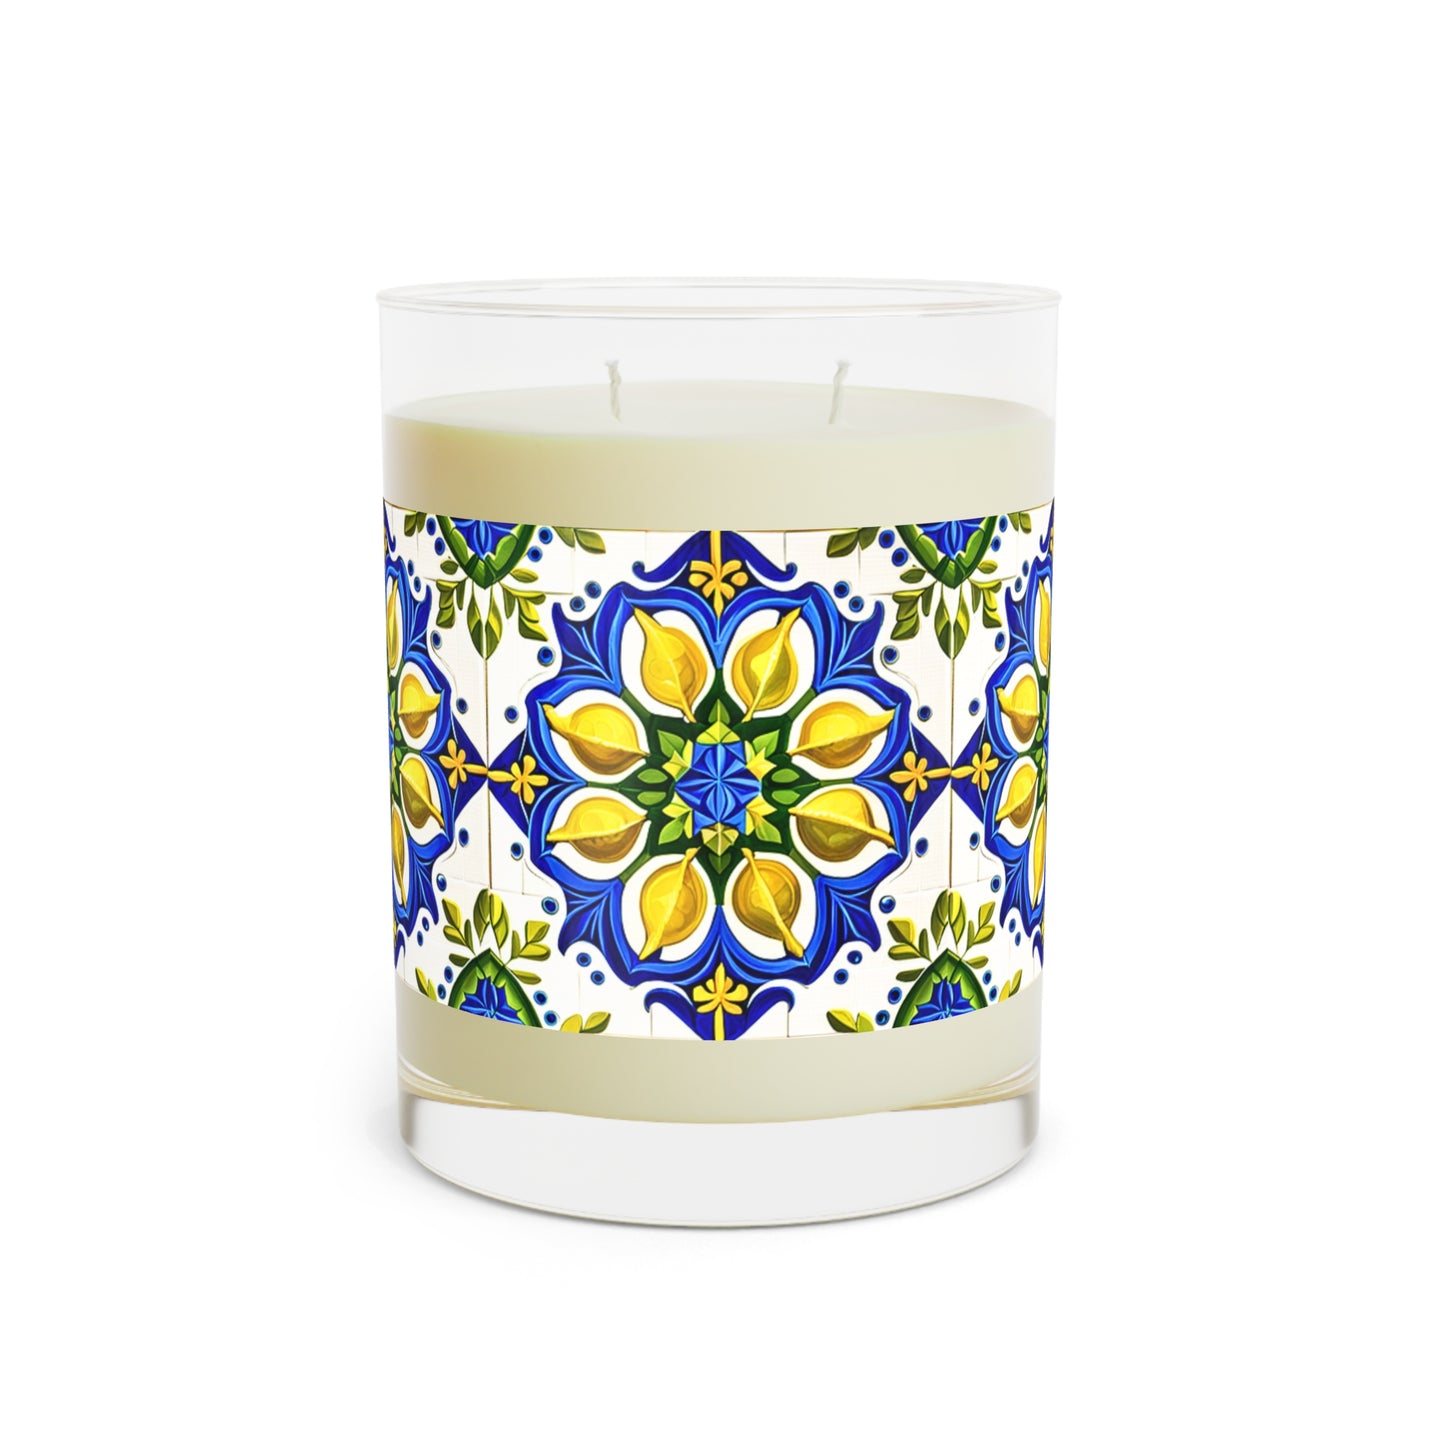 Island of Capri Limone Italian Durata Tile Italy Aromatherapy Essential Oils Natural Decorative Scented Candle - Full Glass, 11oz